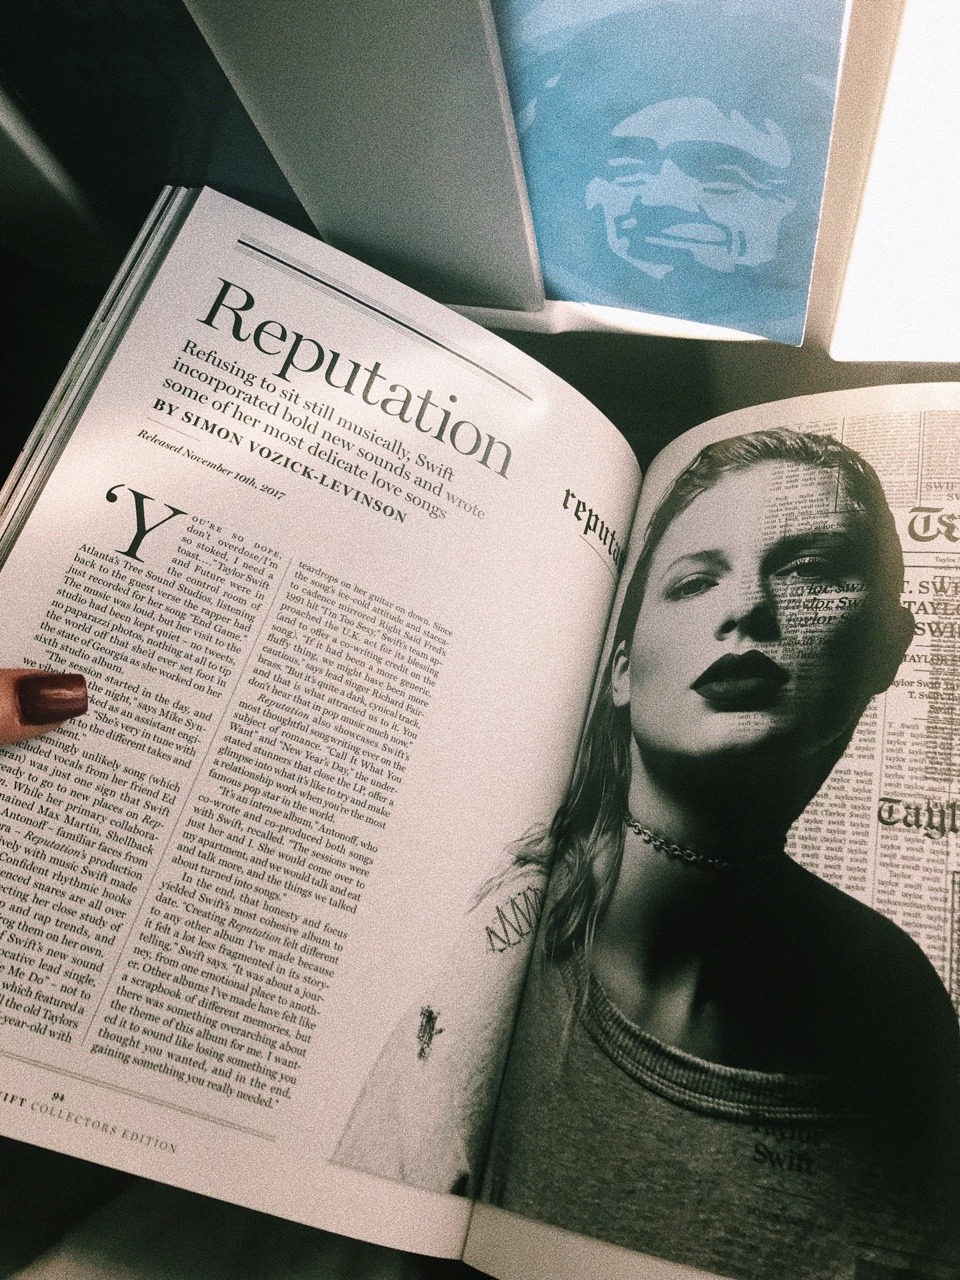 Taylor Swift - reputation (Full Album) (Lyrics) 